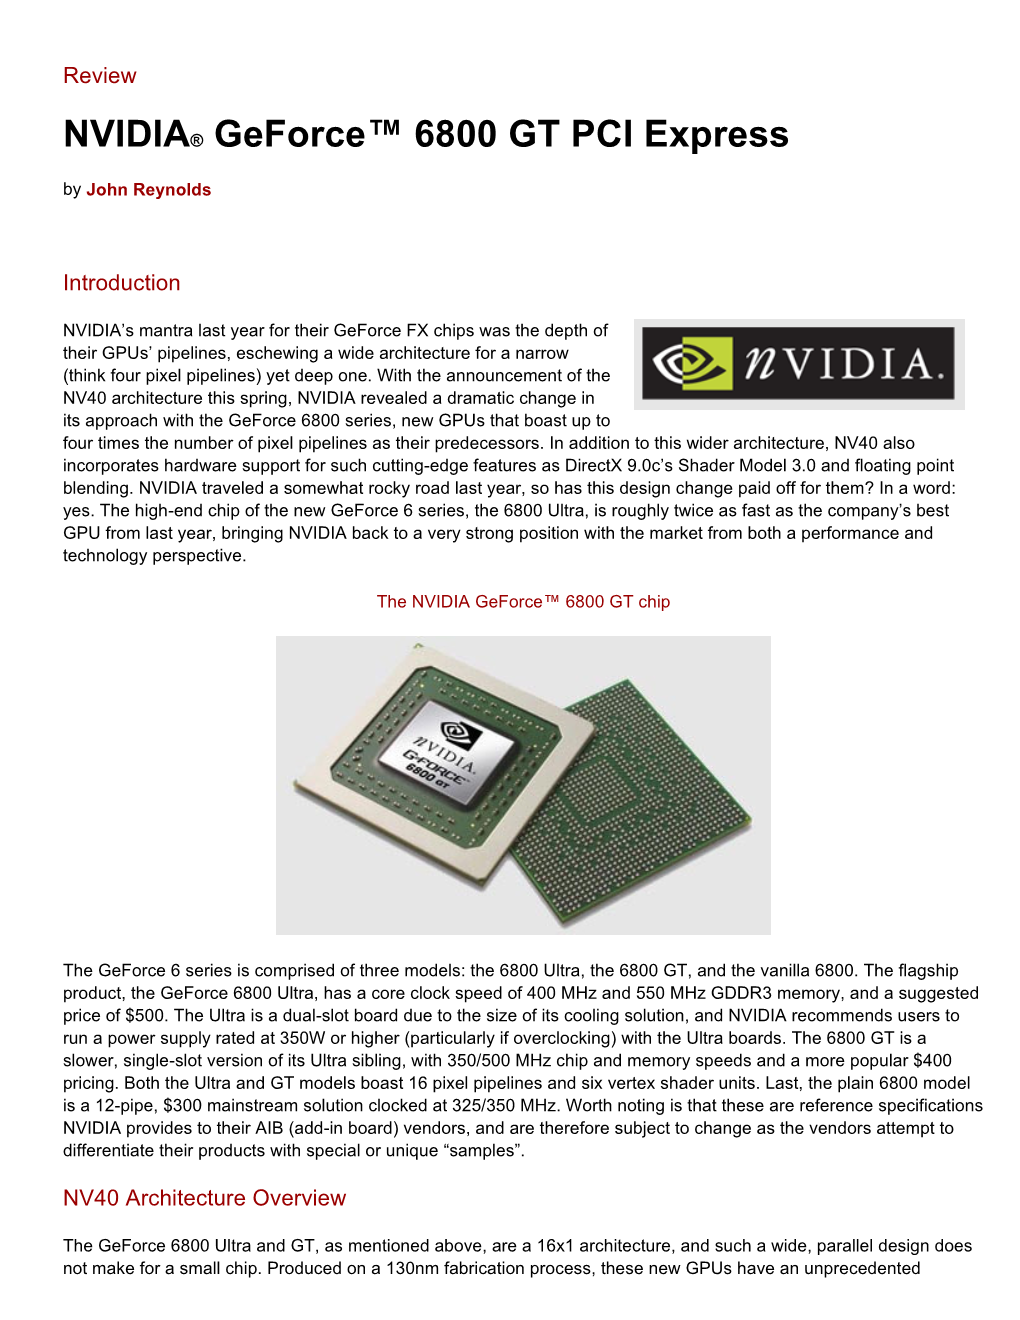 NVIDIA® Geforce™ 6800 GT PCI Express by John Reynolds